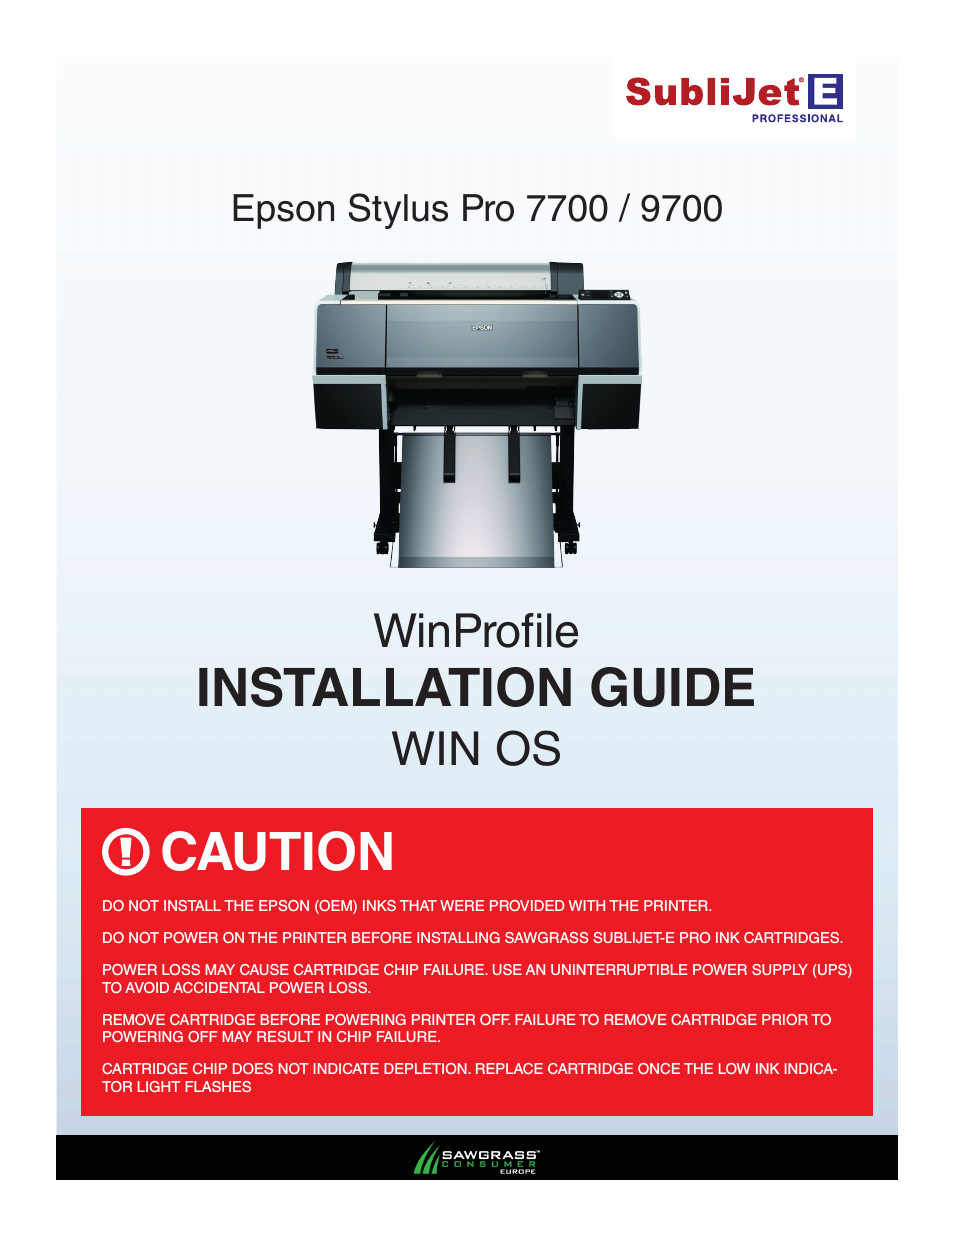 SubliJet E Epson Stylus Pro 7700 (Windows ICC Profile Setup): Printer/Profile Installation Guide